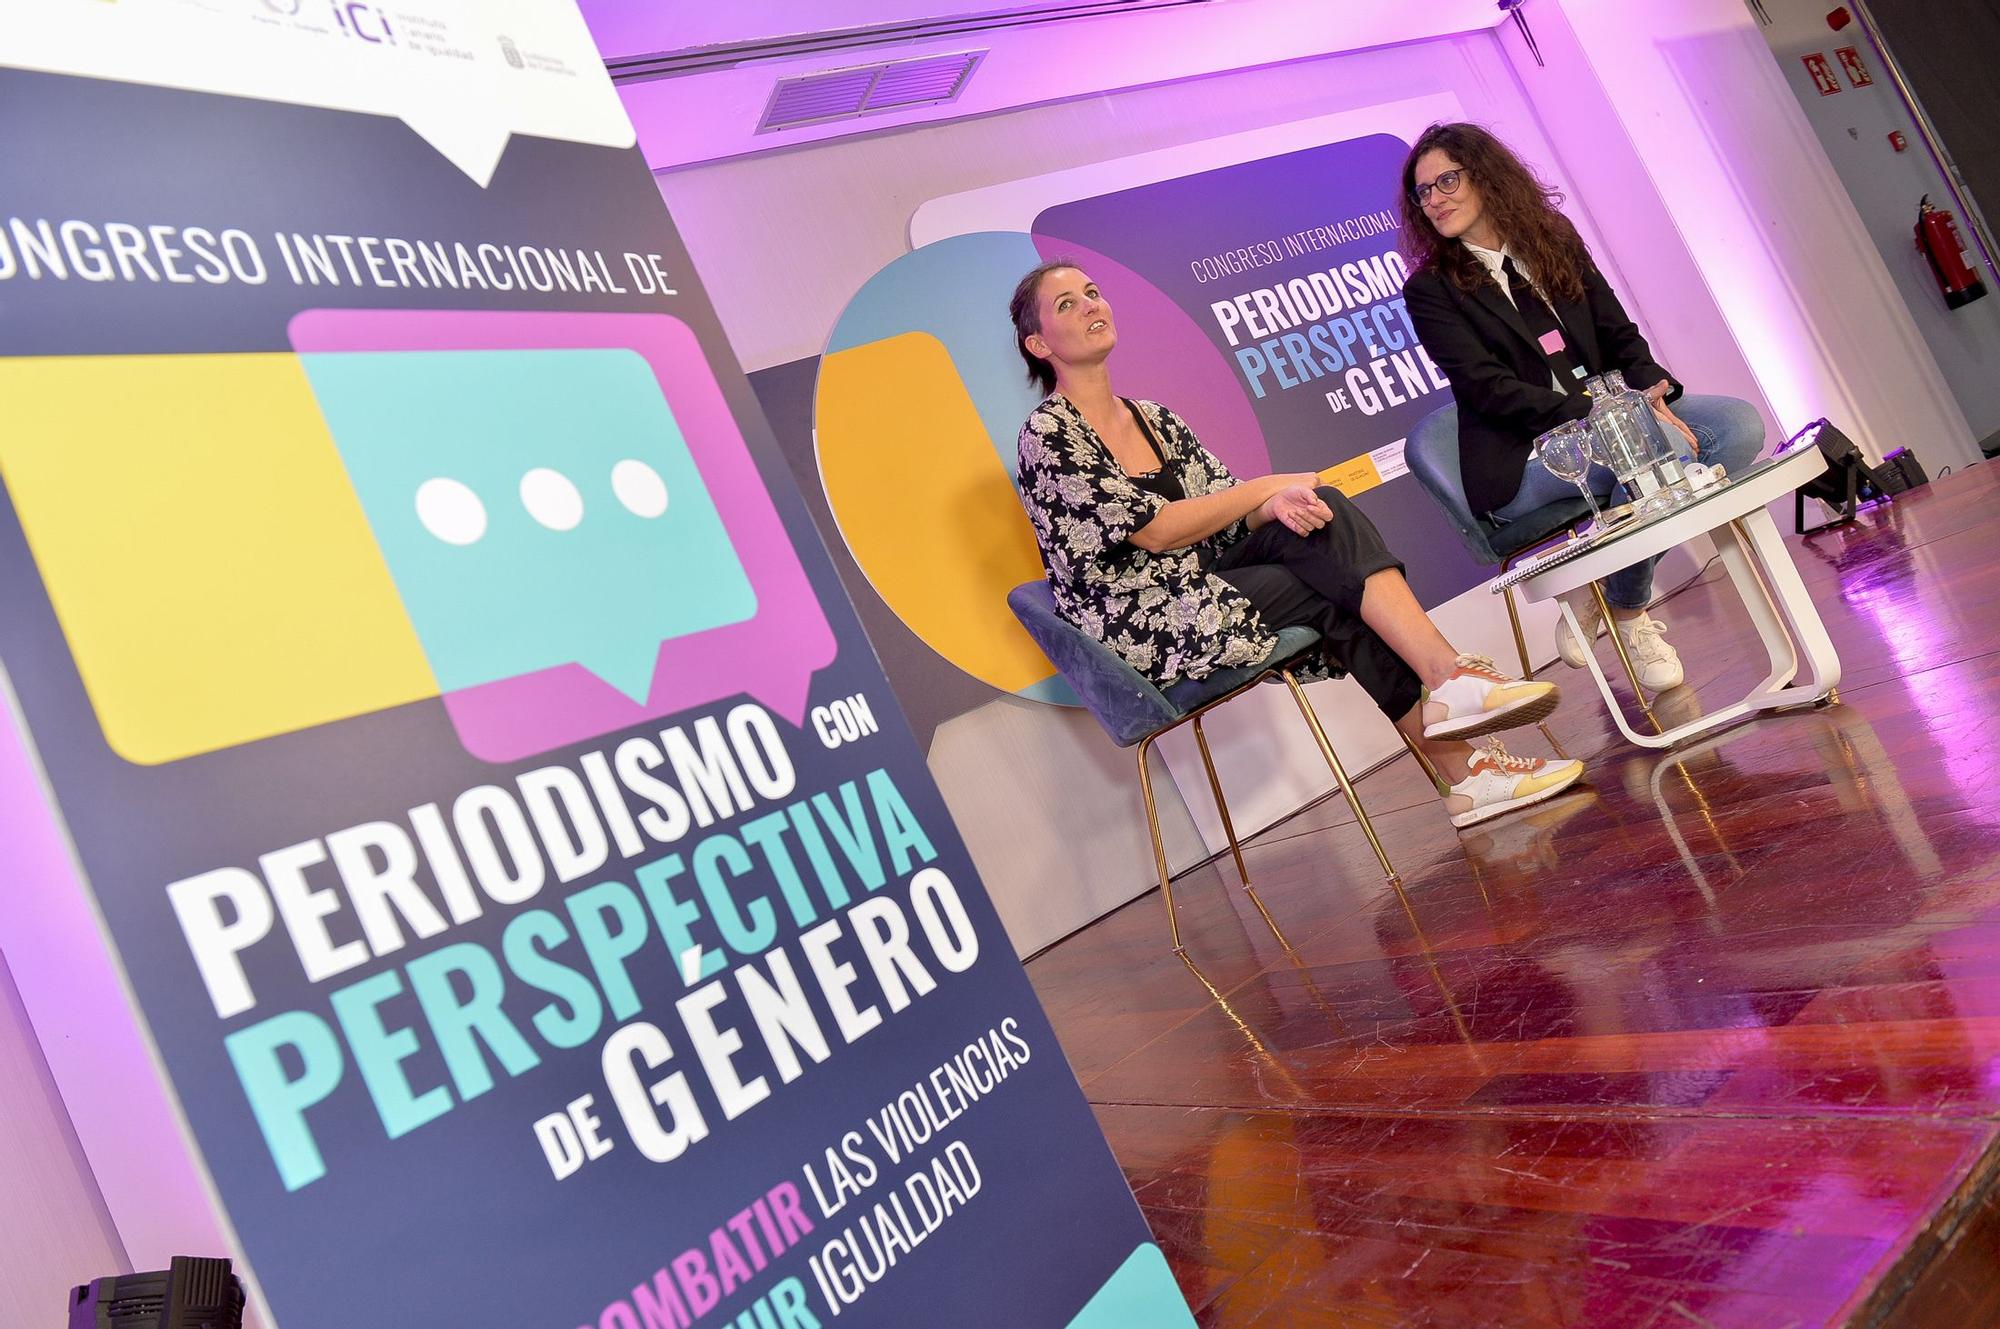 Congreso Internacional de Periodismo con perspectiva de género